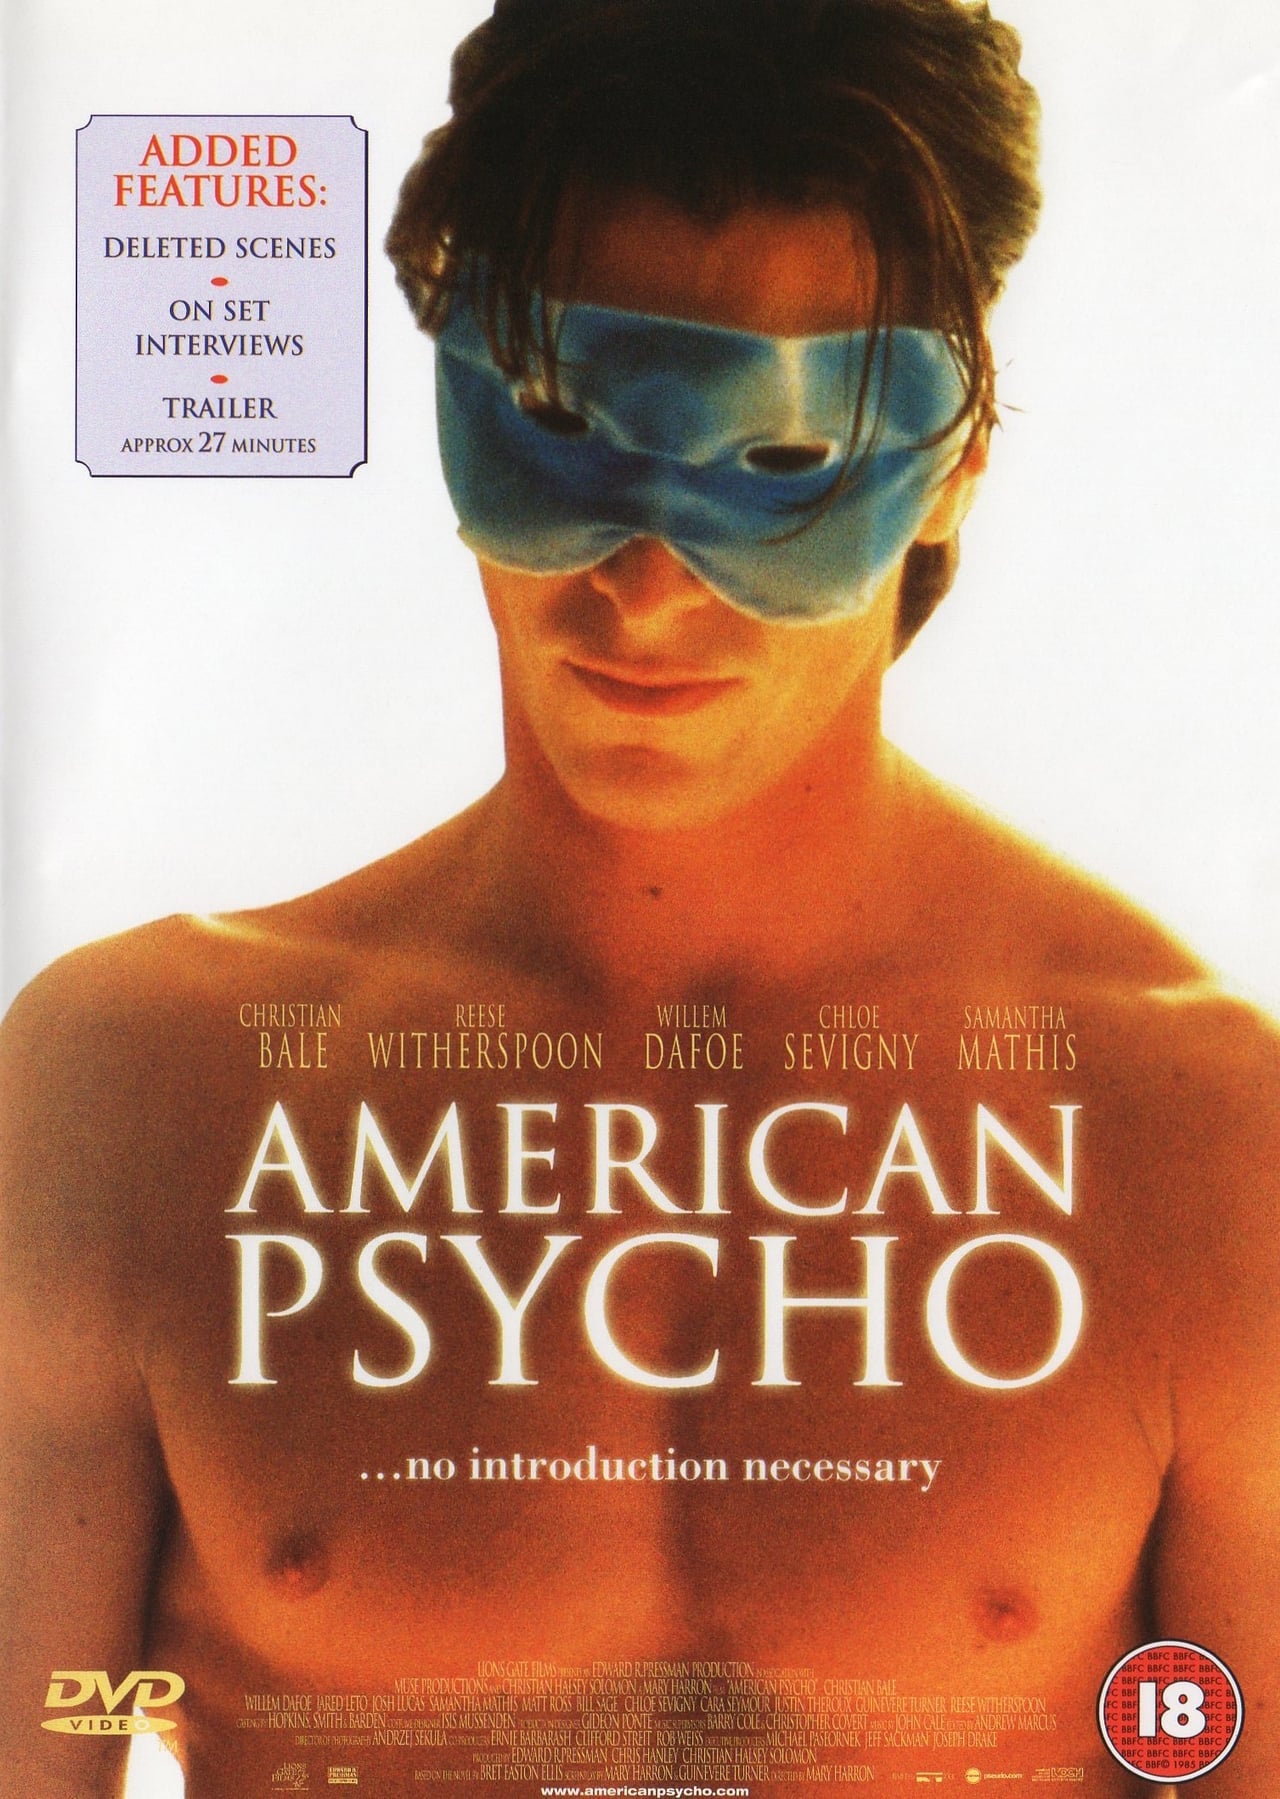 Netflix American Psycho 2000 Theatrical Cut 640kbps 23976fps 48khz 